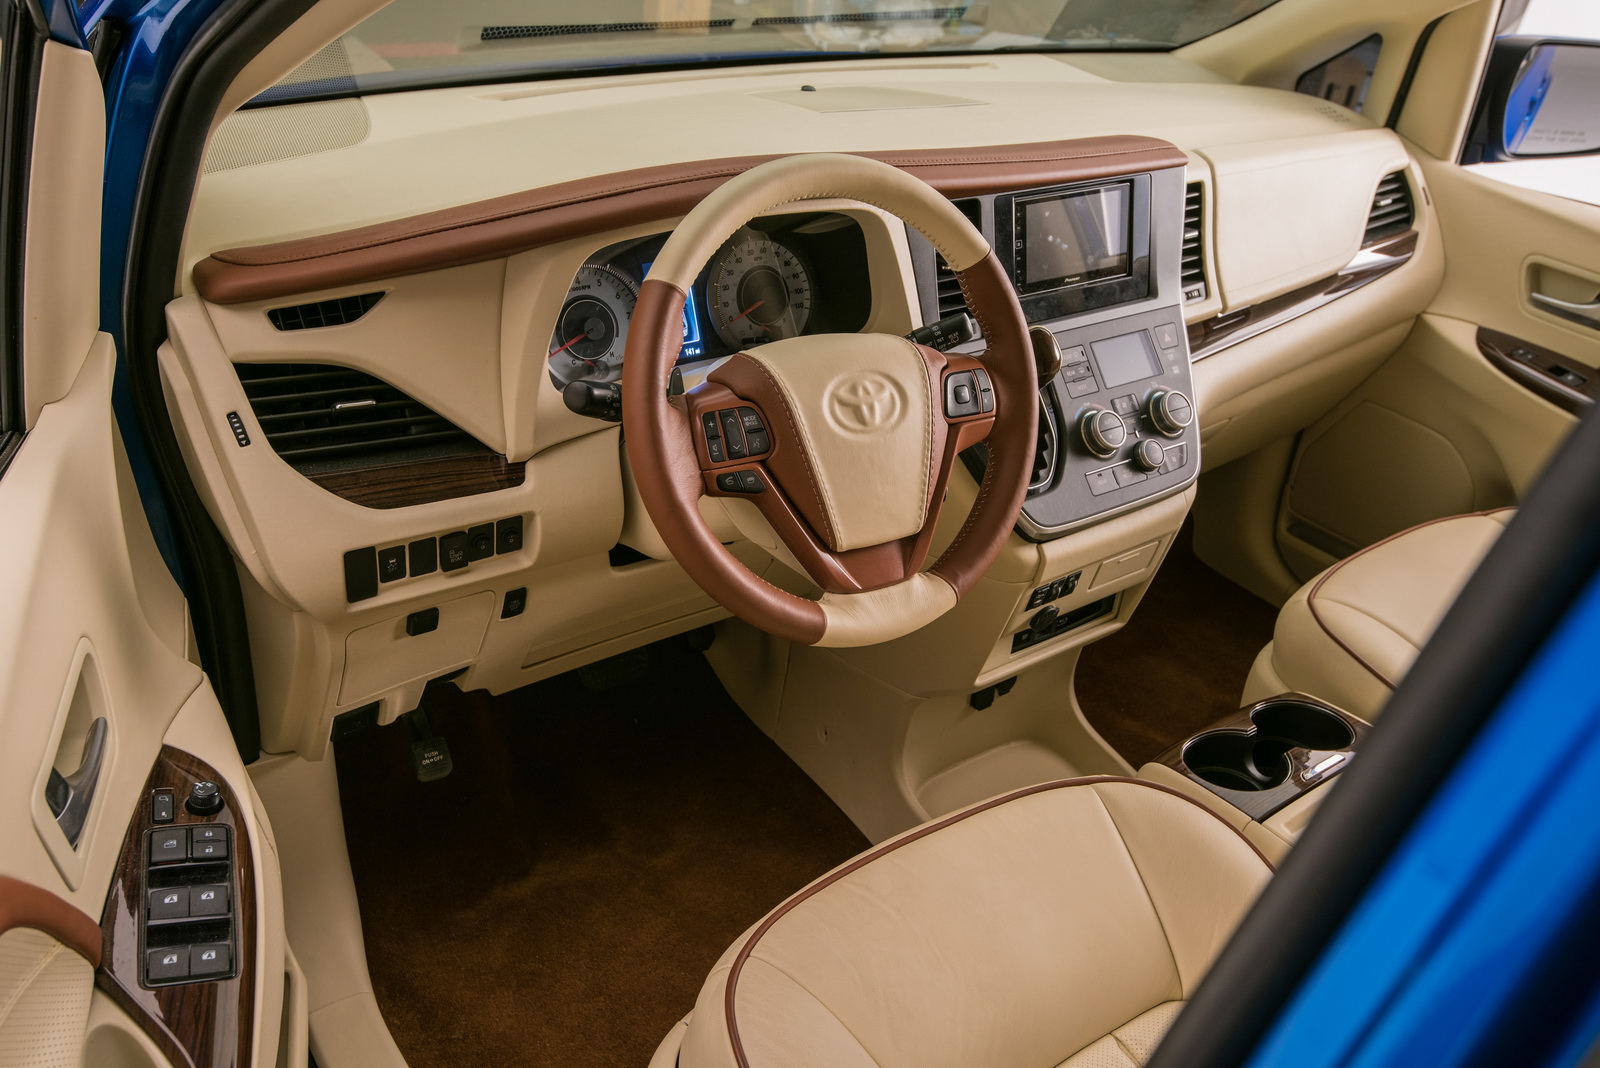 Inside the Toyota Sienna